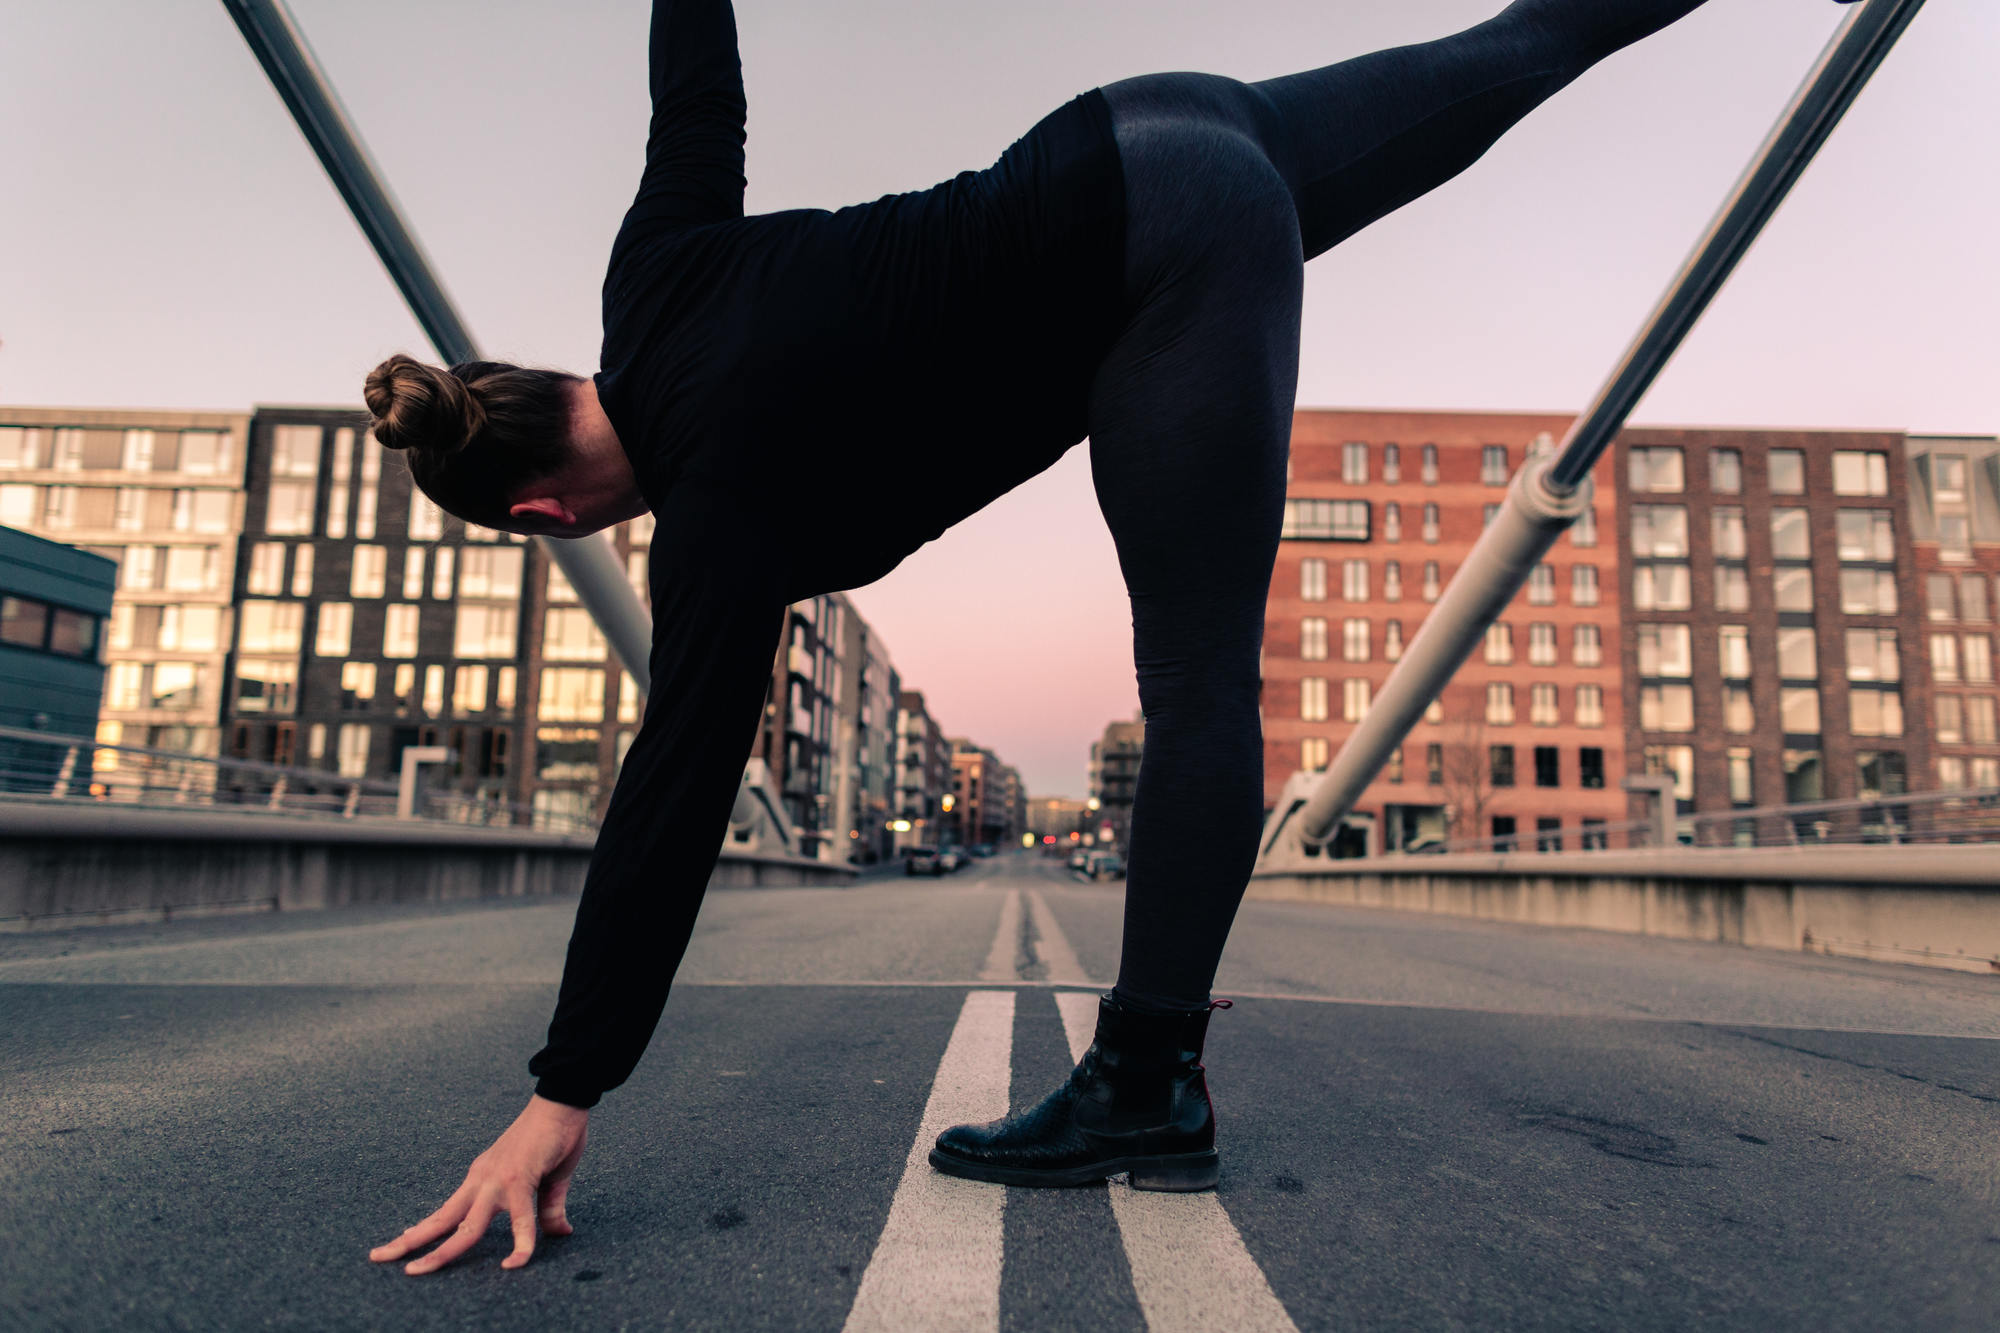 urban-yoga-photoshoot-copenhagen-silhouettes-poses-19